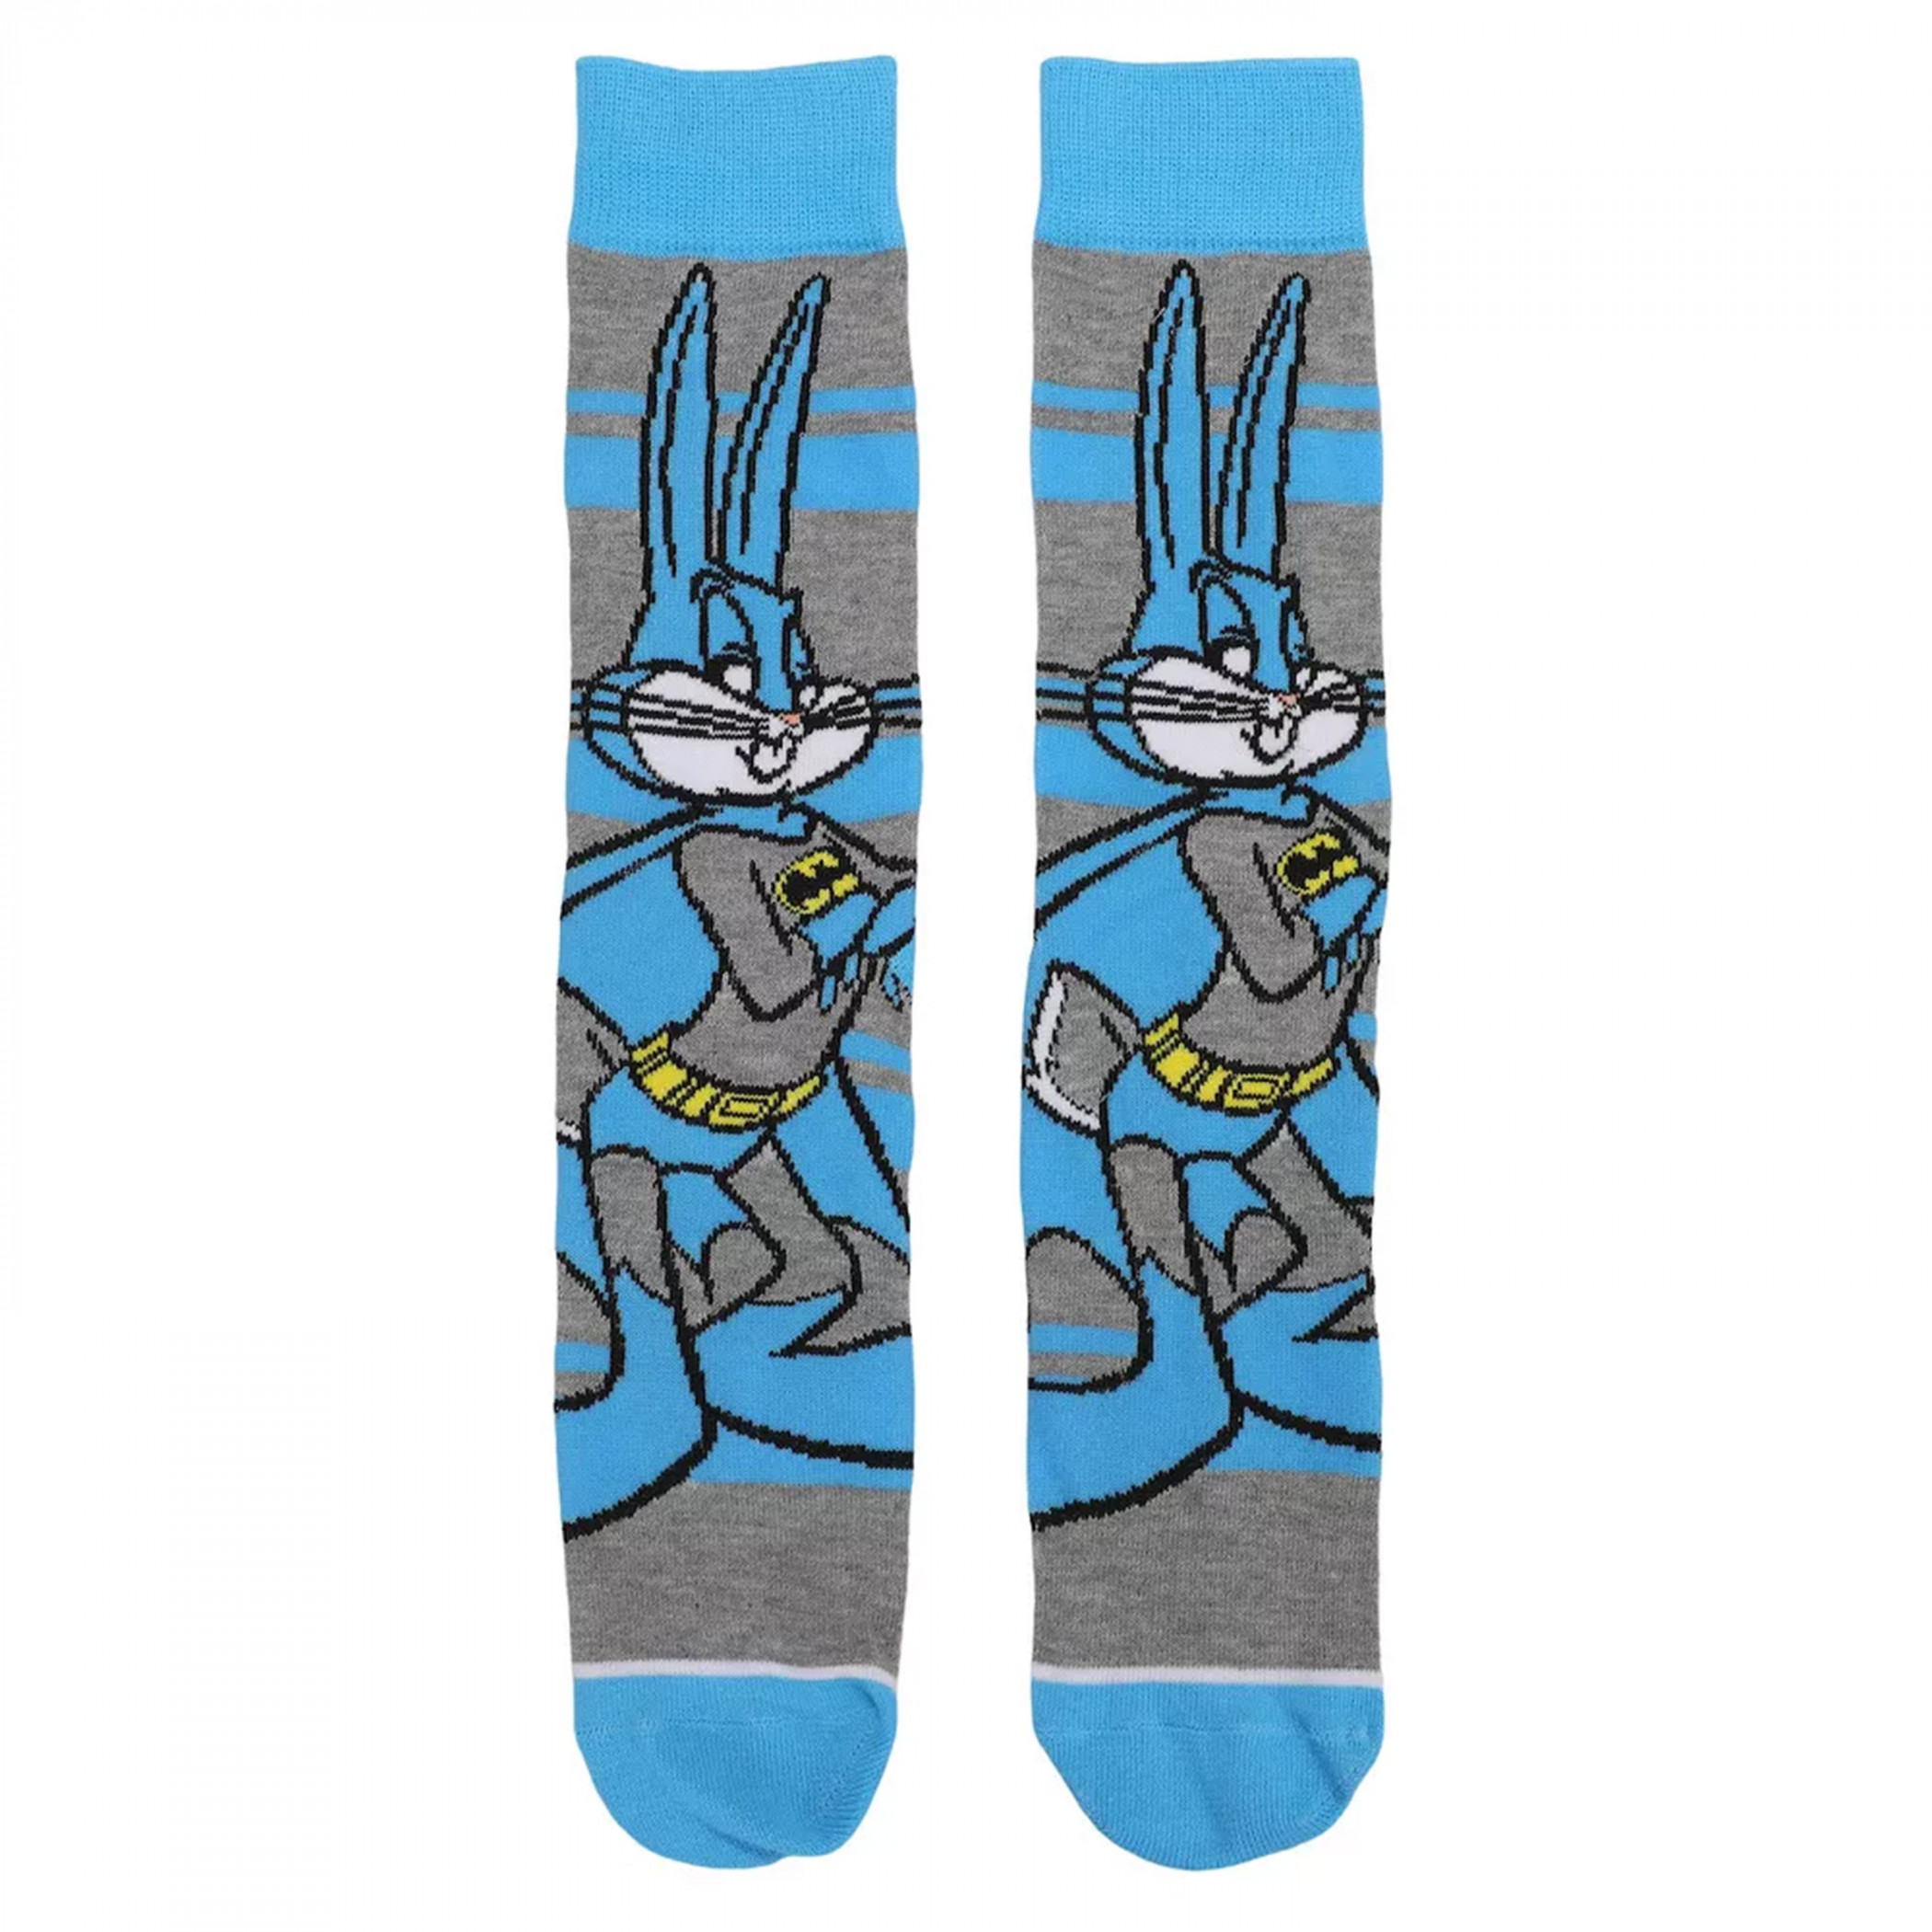 Justice League X Looney Tunes Crew Socks 5-Pair Pack